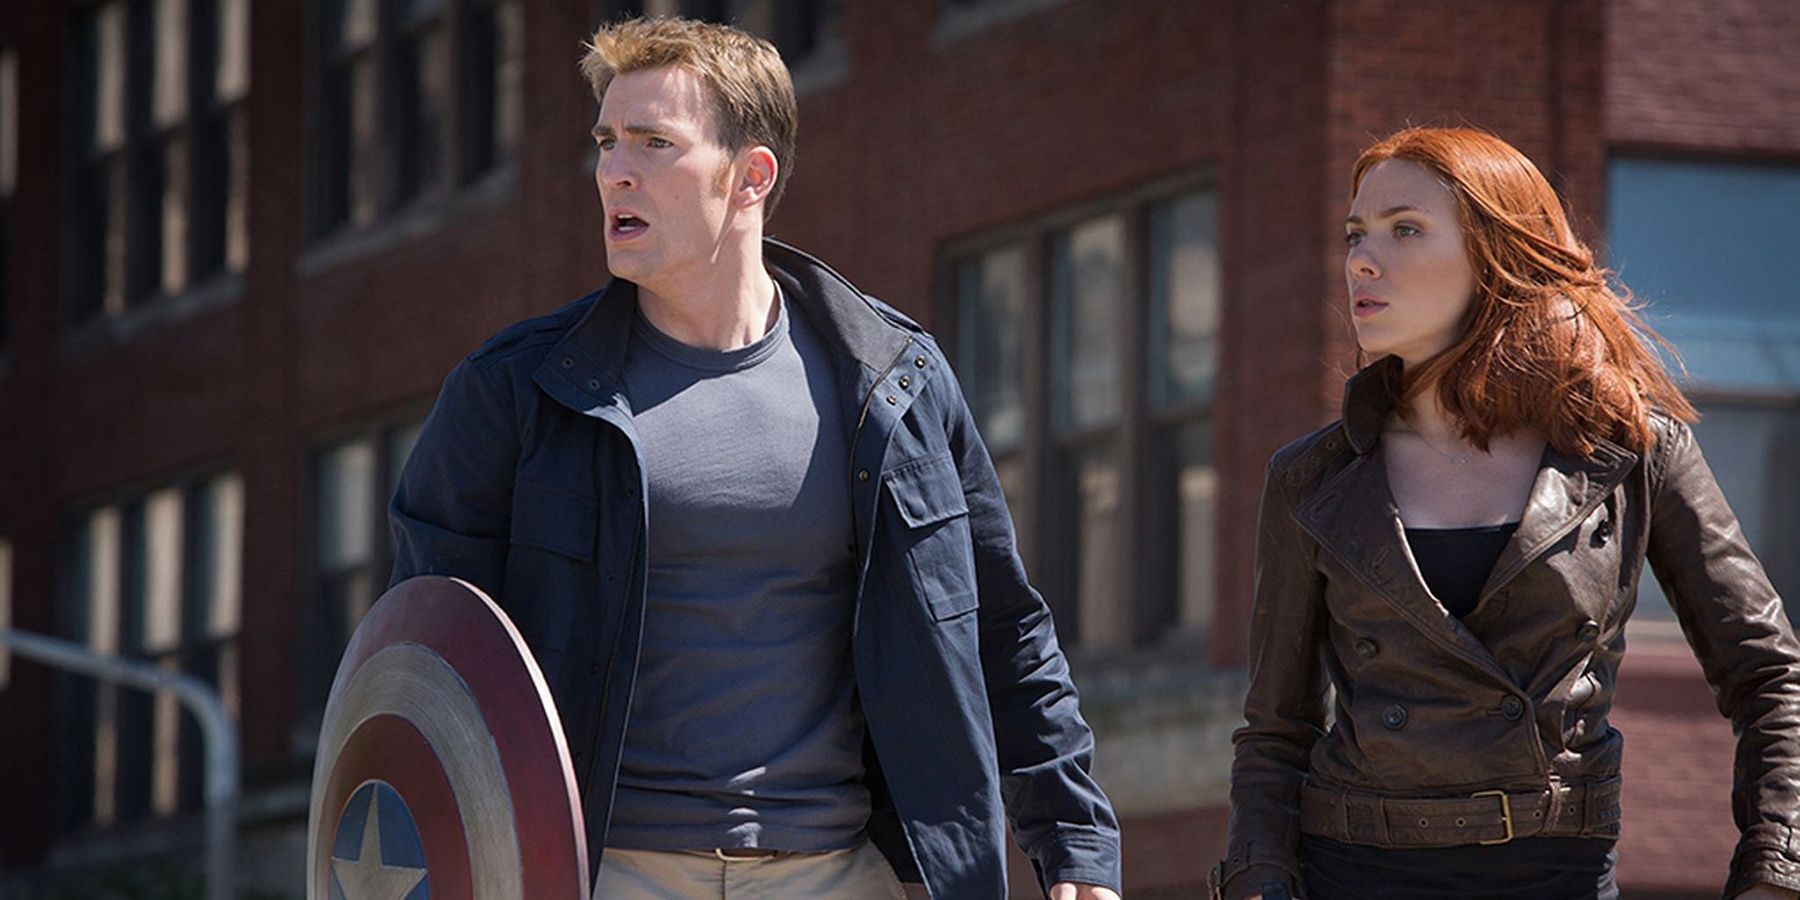 Chris Evans as Captain America (left) and Scarlett Johansson as Black Widow (left)